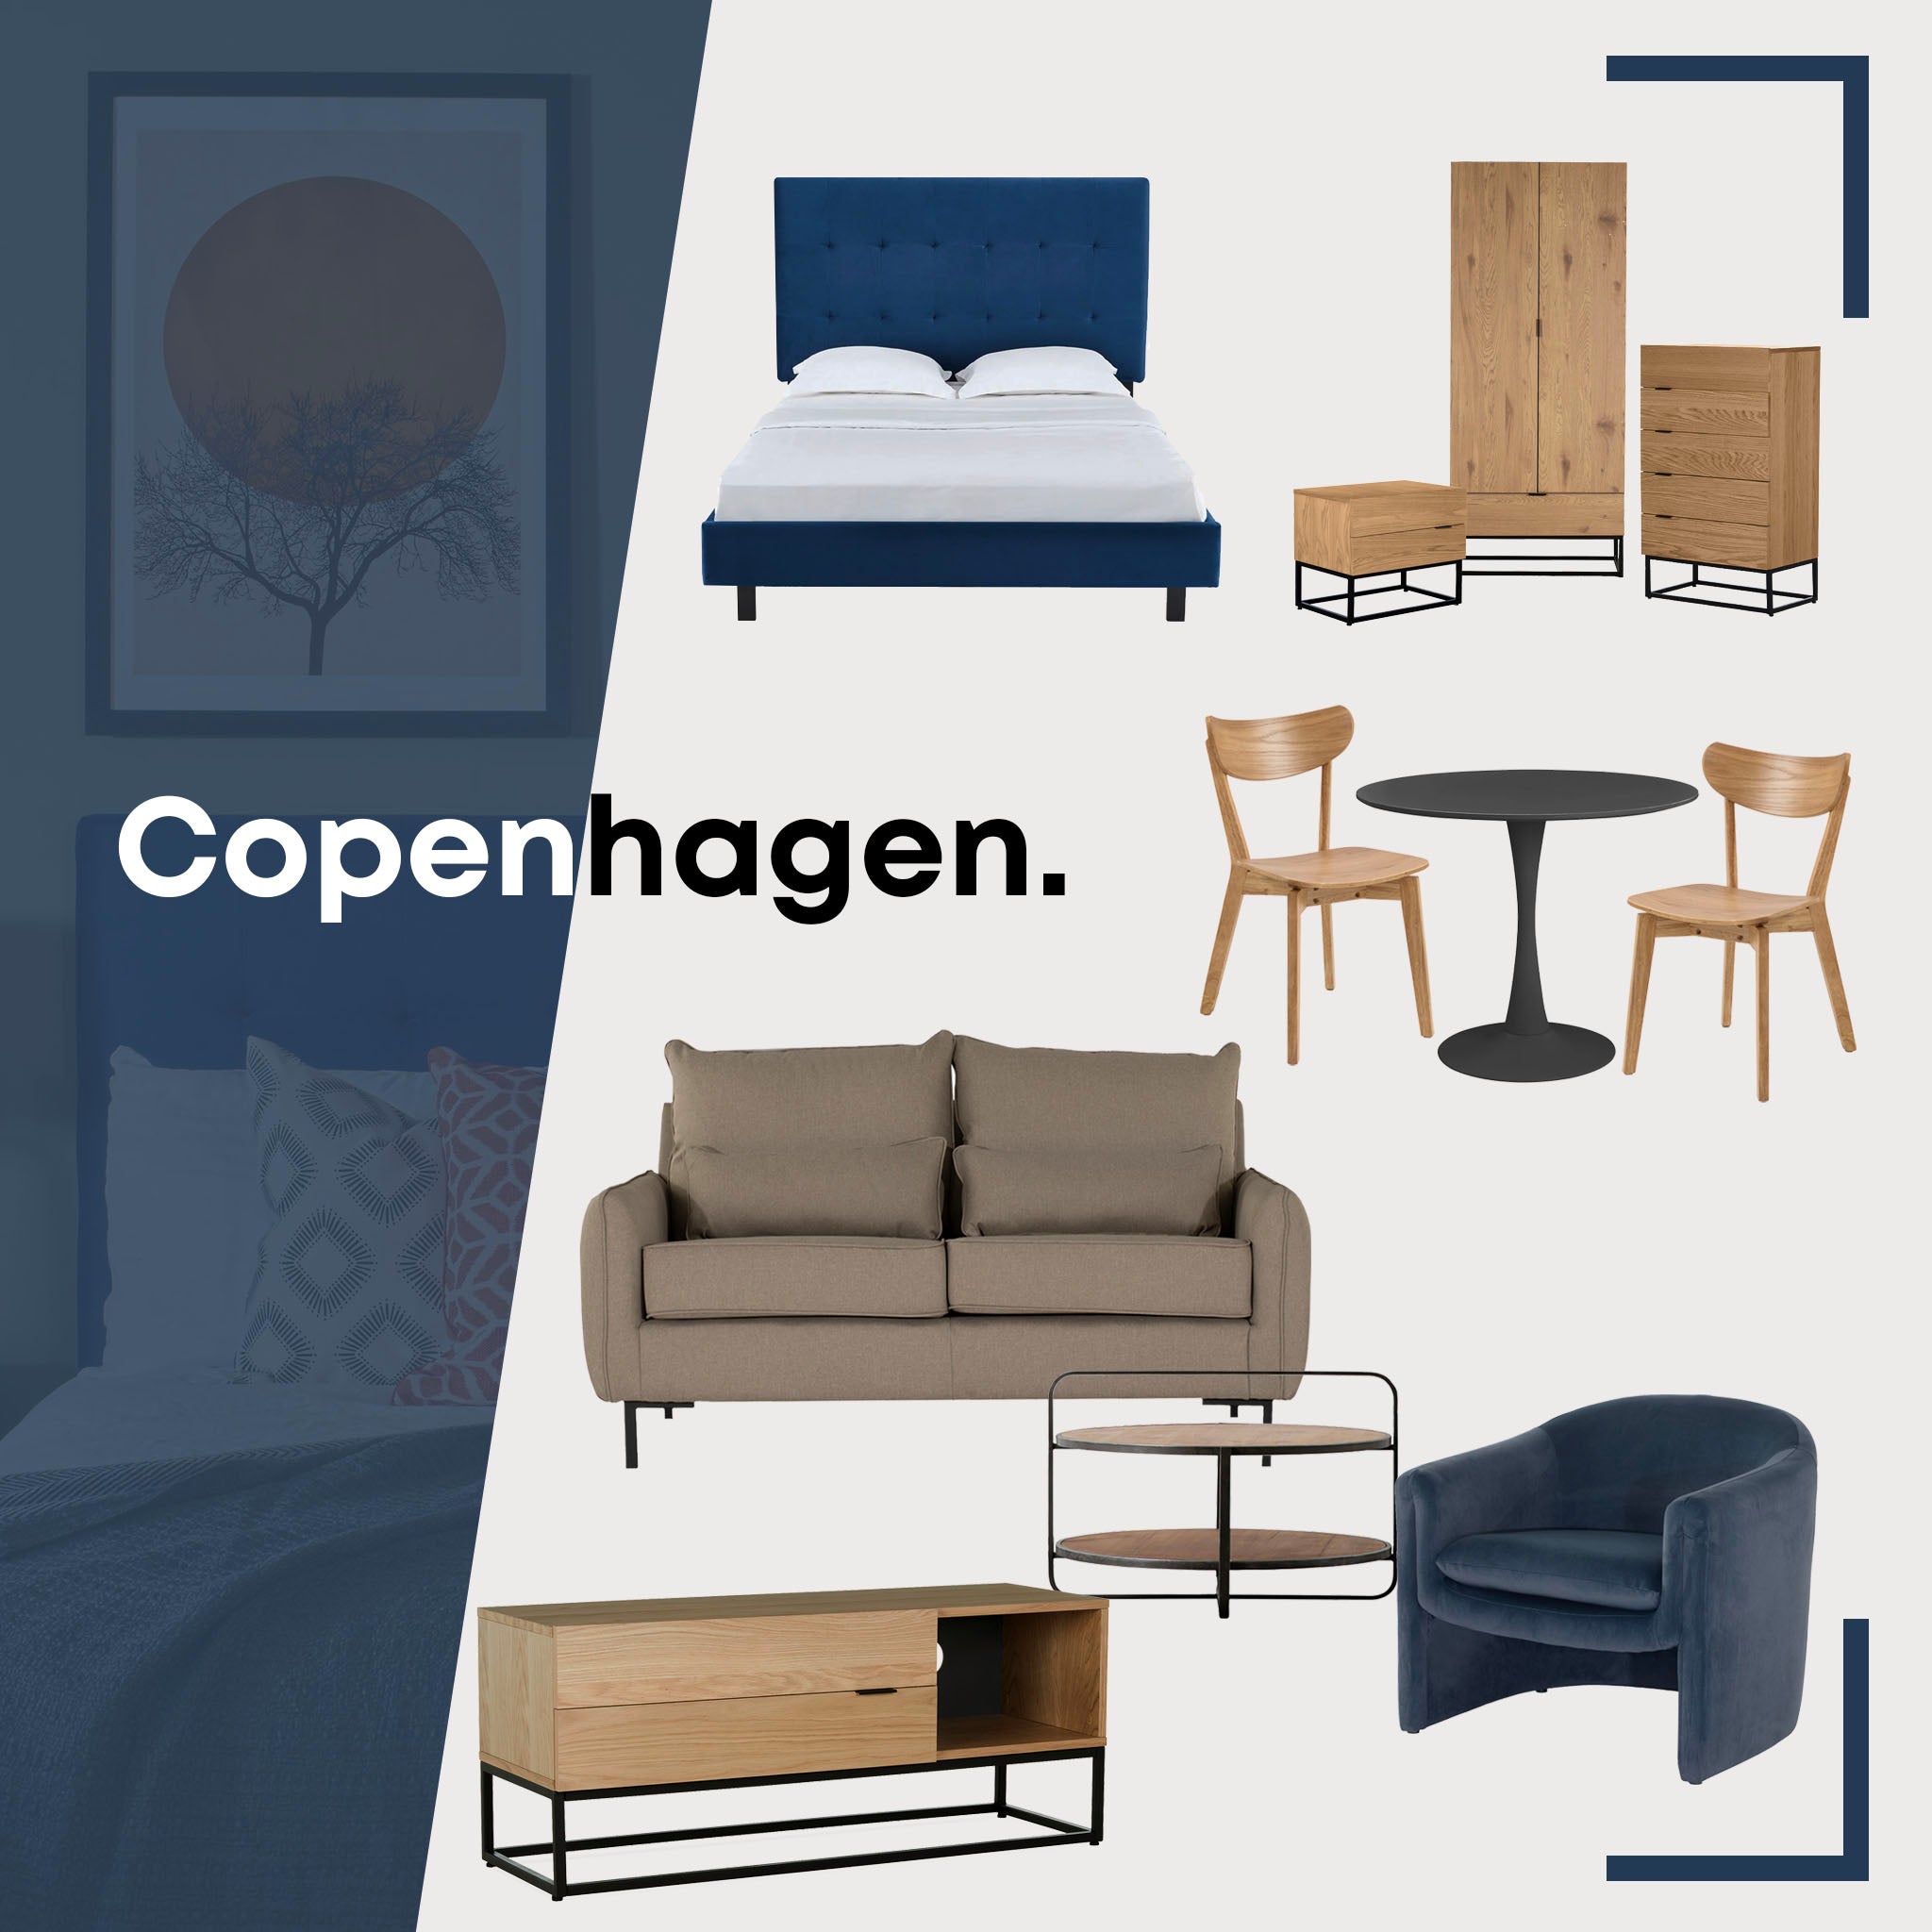 The Copenhagen Furniture Package